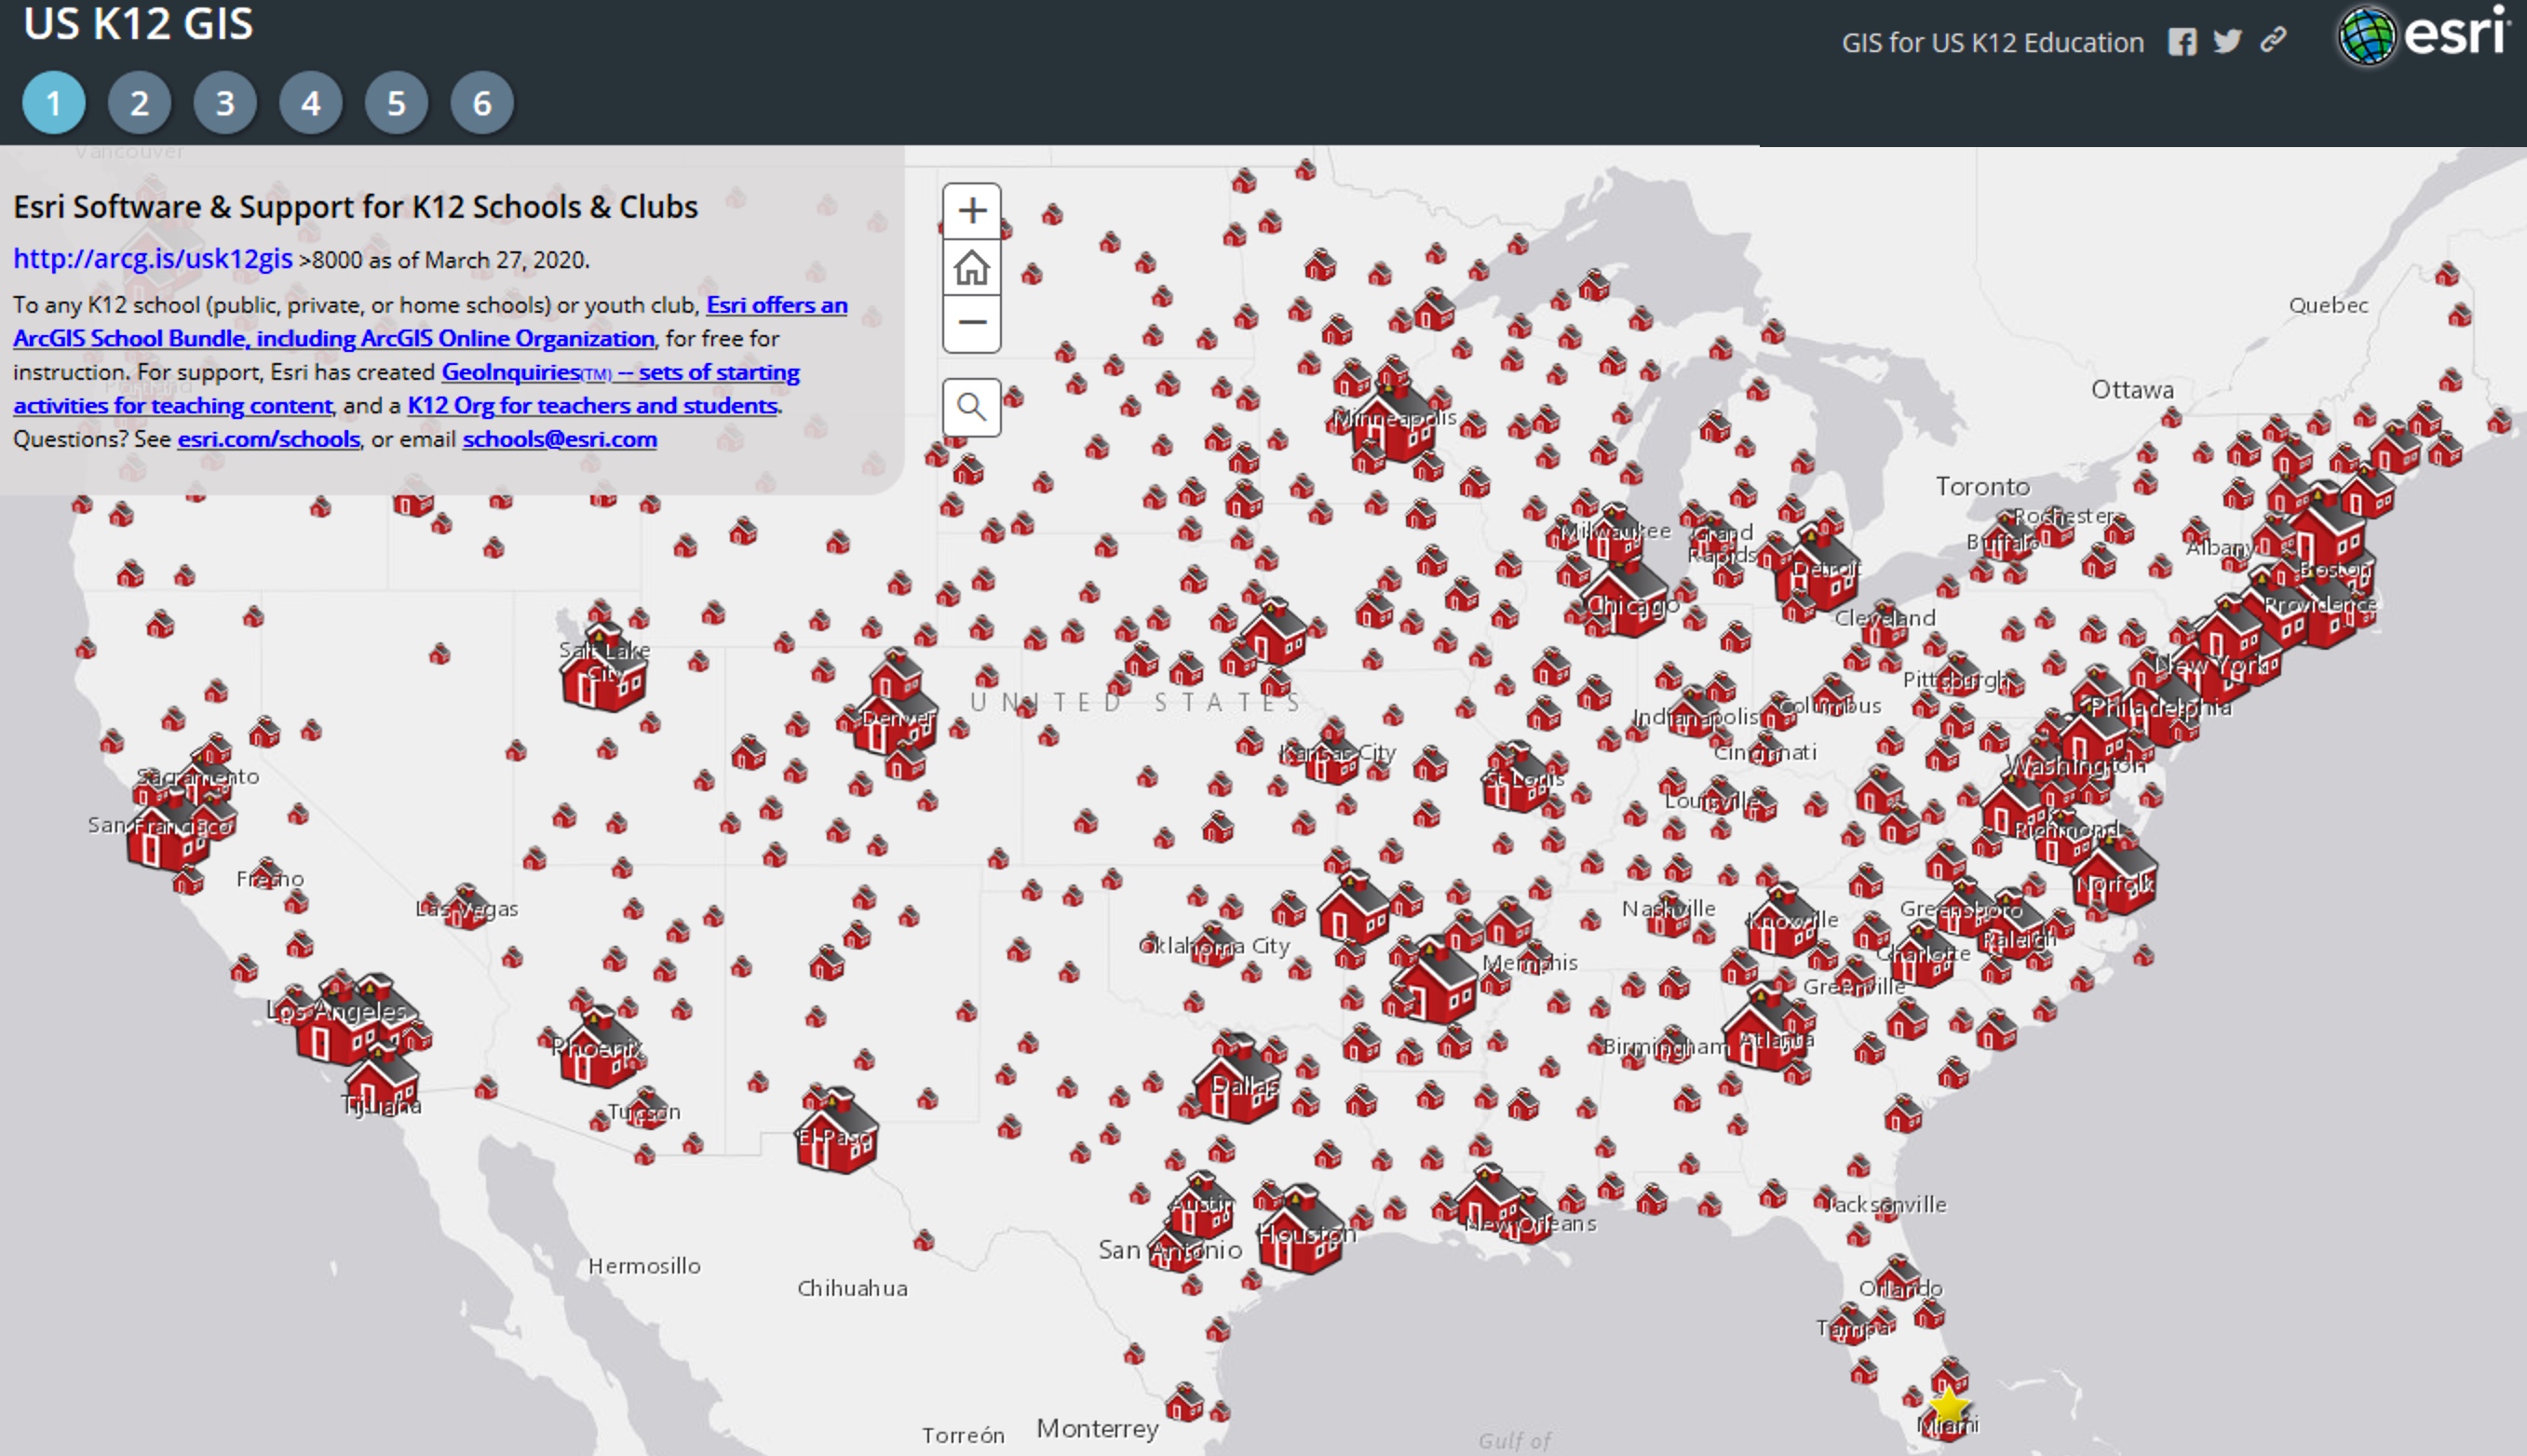 Map of US ArcGIS School Bundle sites